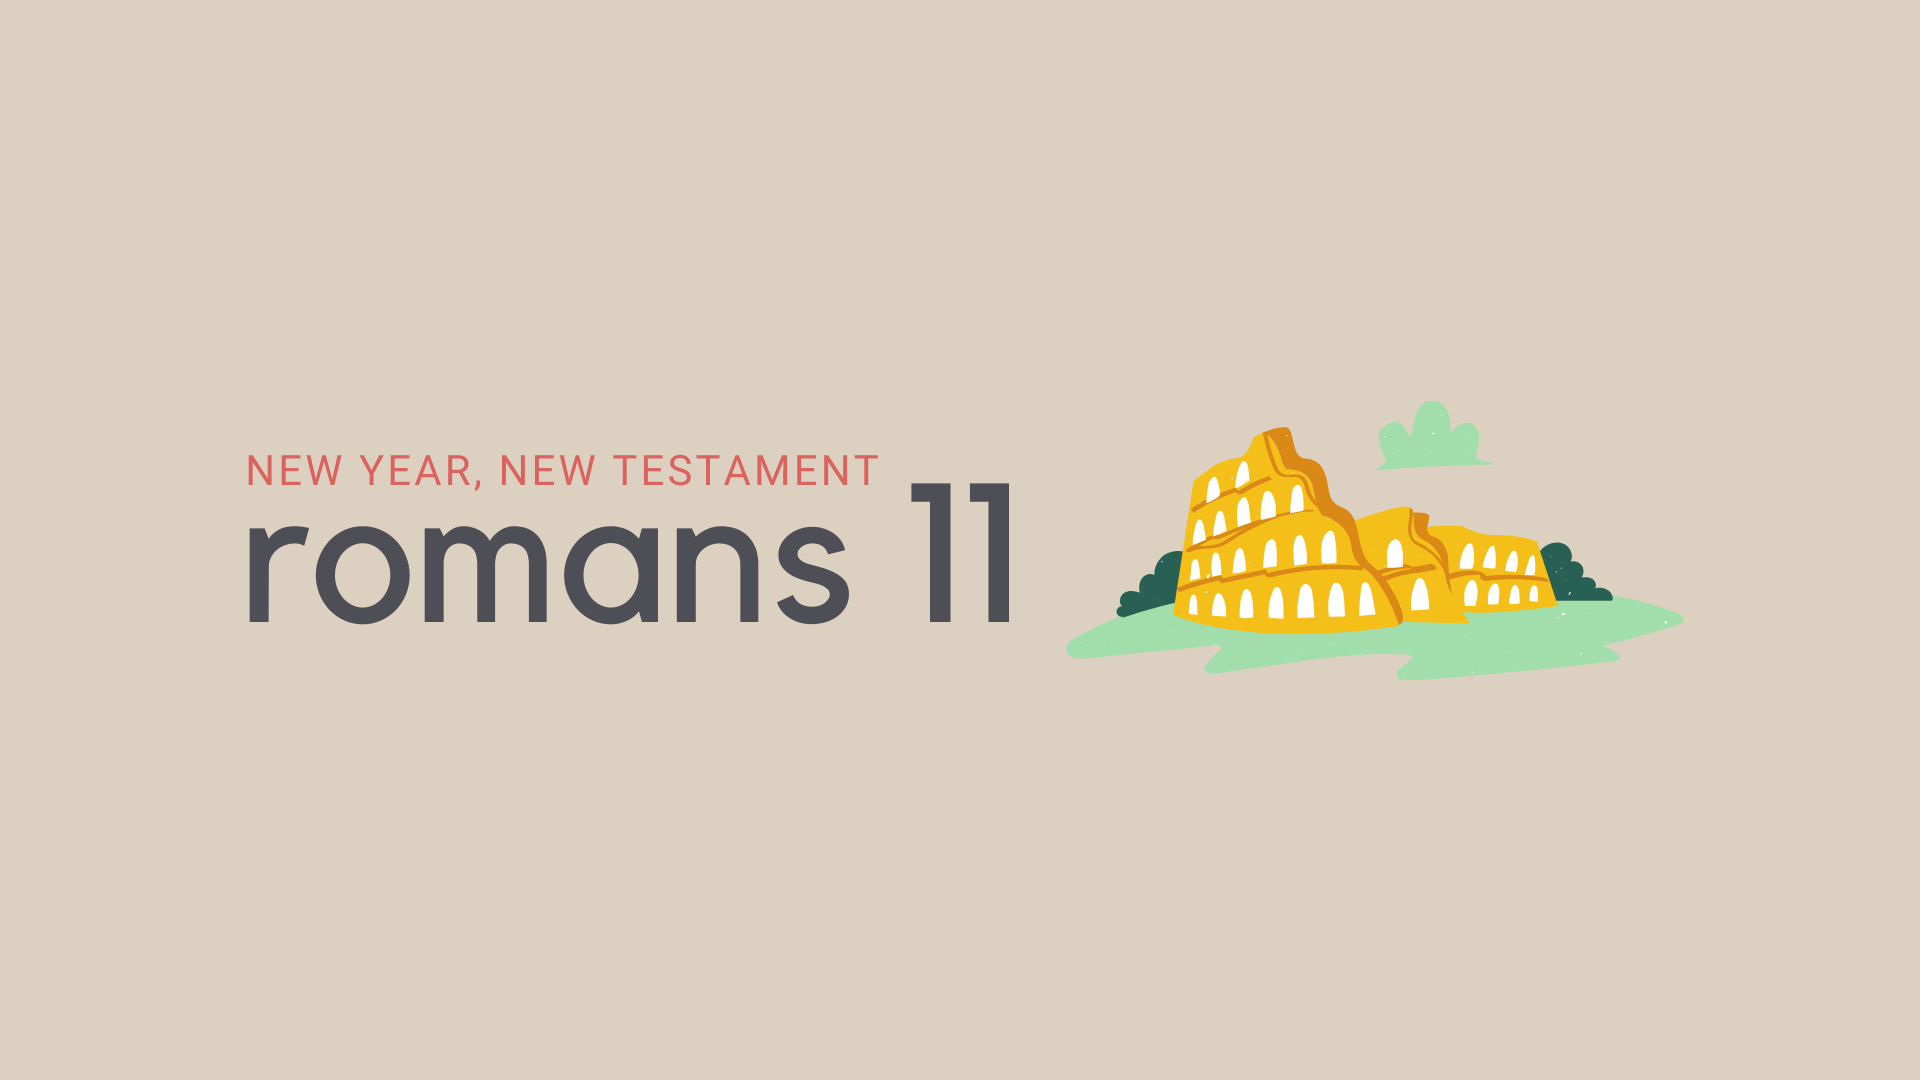 July 1: Romans 11